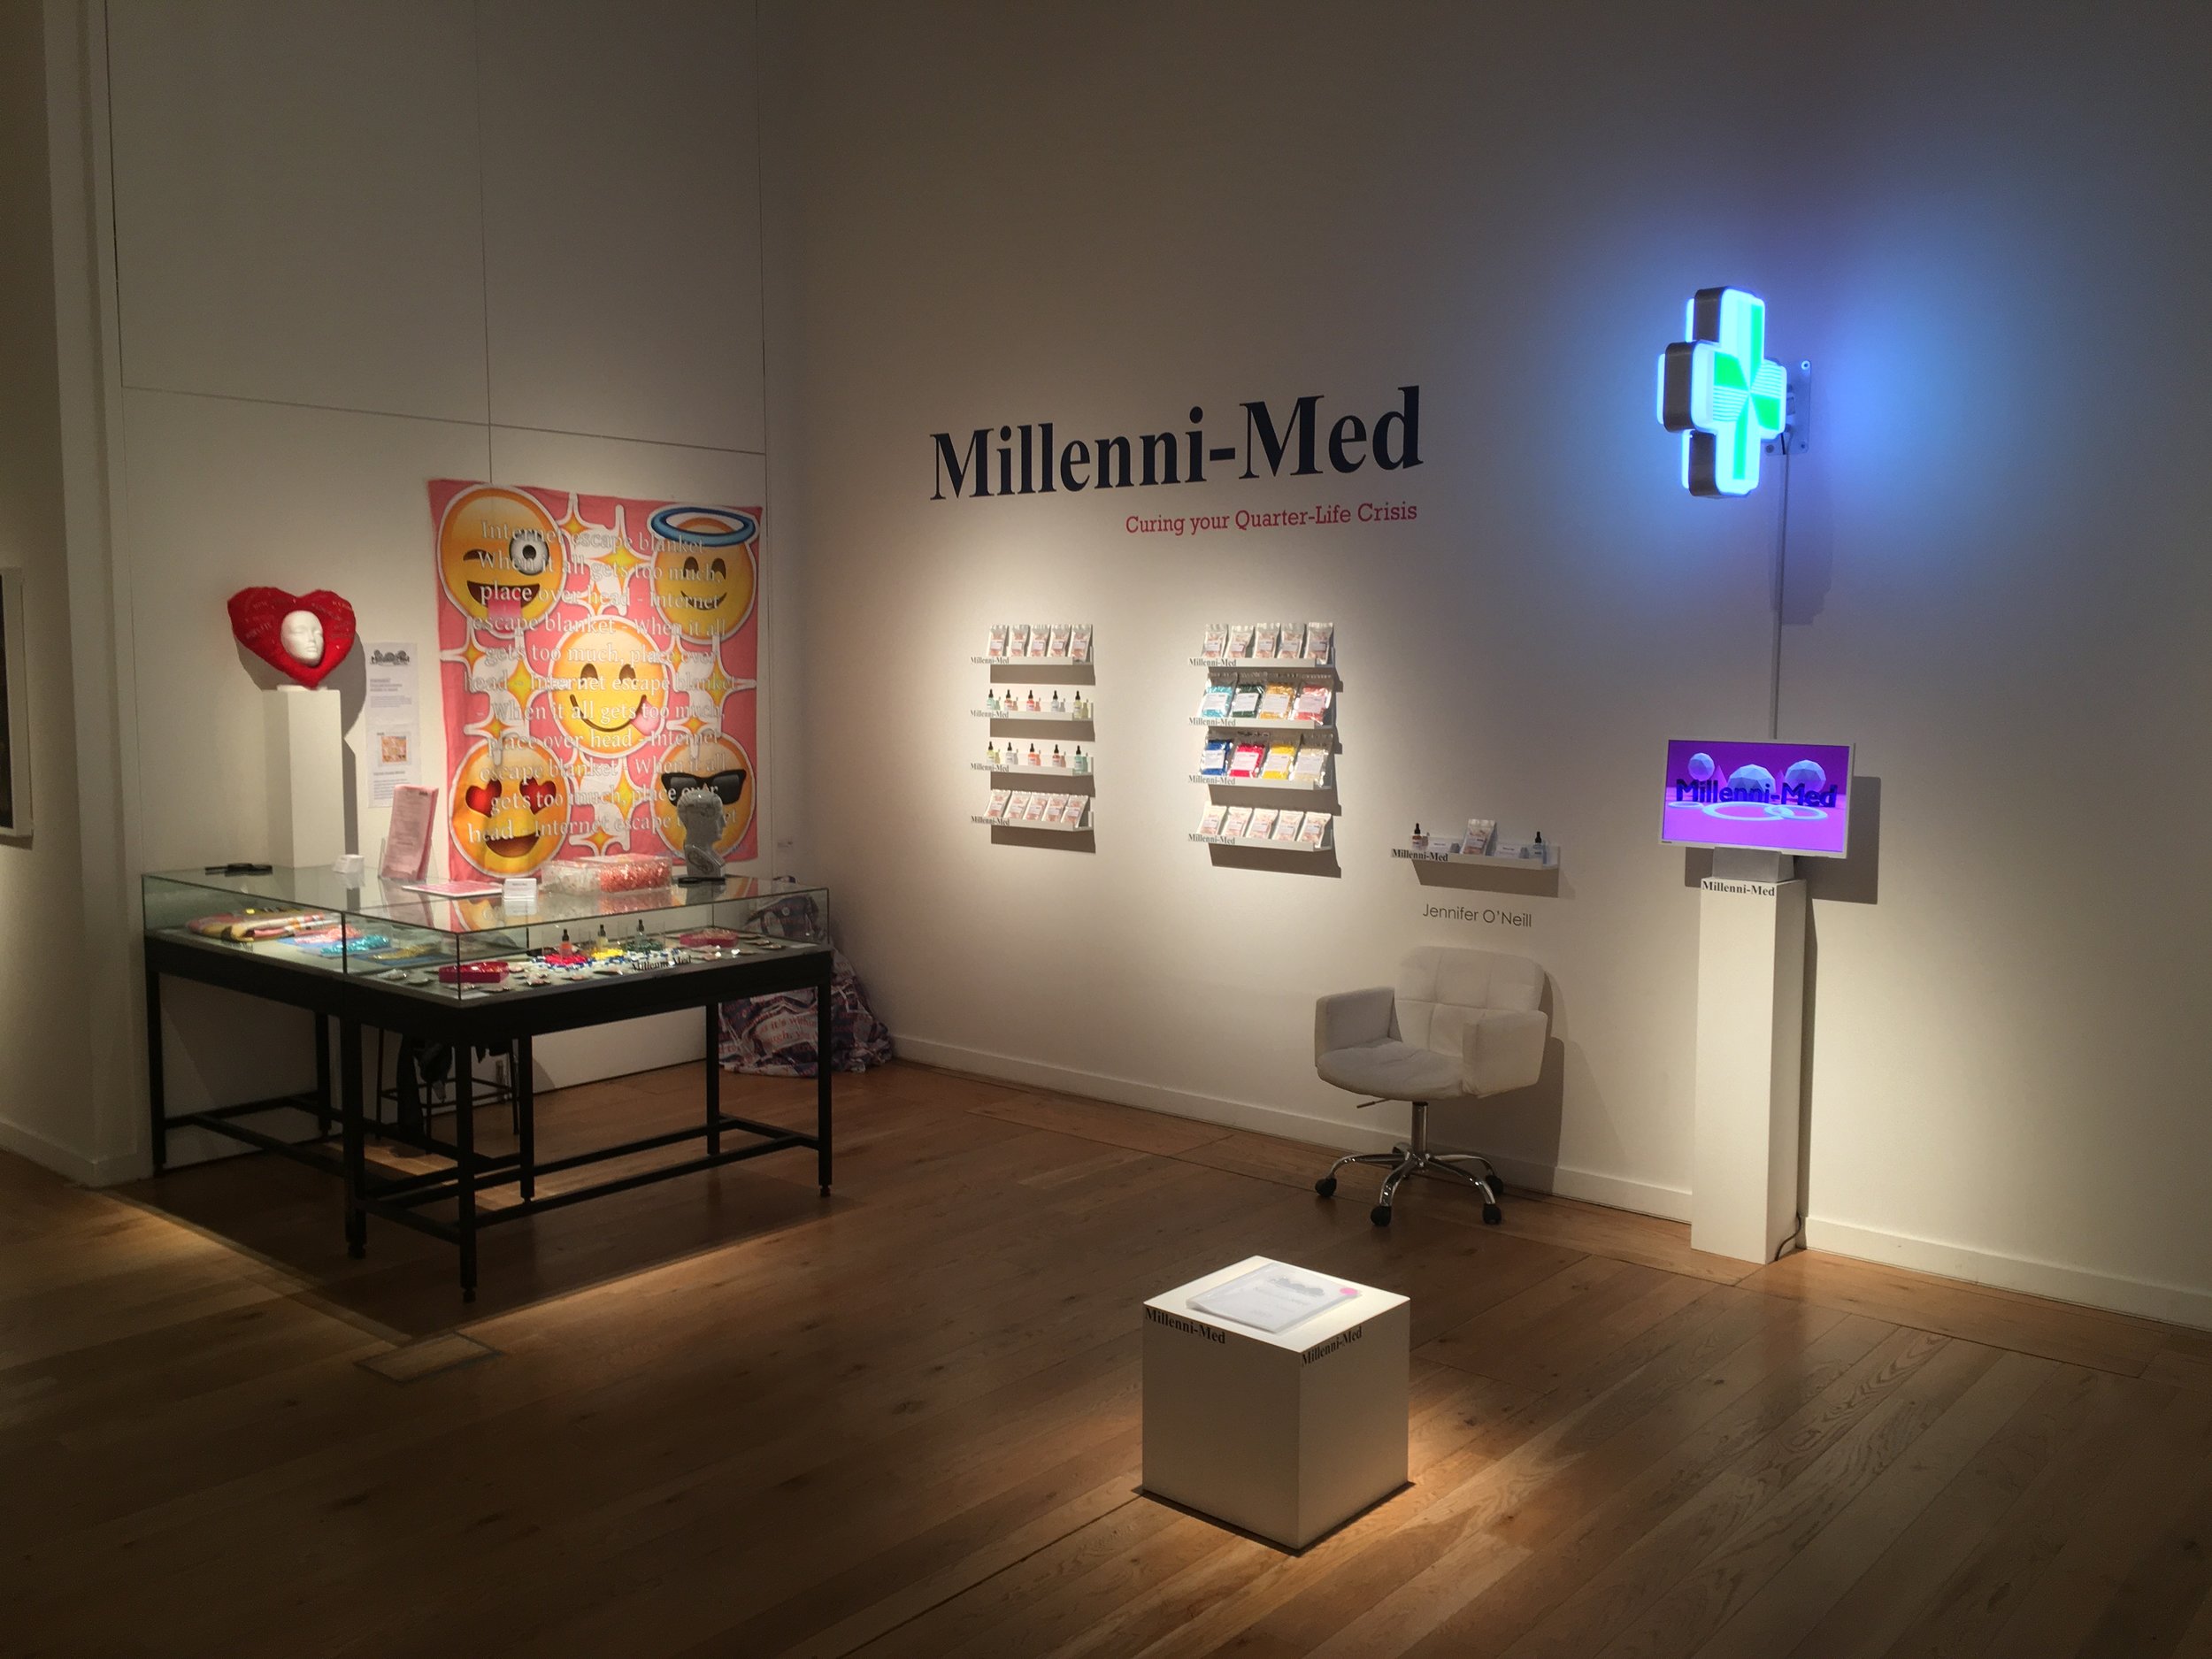 'Millenni-Med', Jennifer O'Neill, Ampersand Inventions studio member, Great North Museum, June 2019.